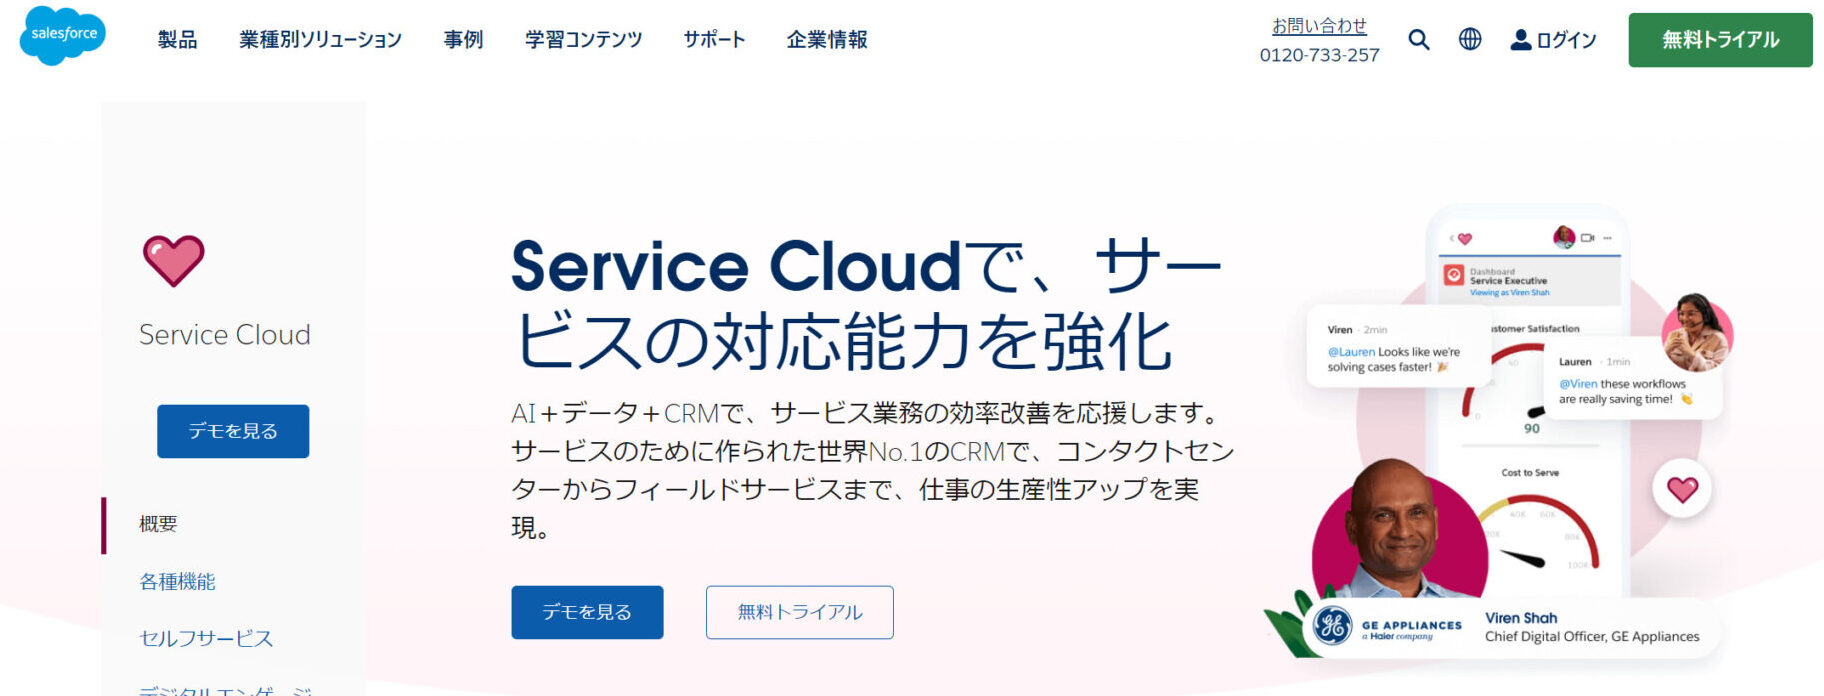 Salesforce Service Cloudのトップページ